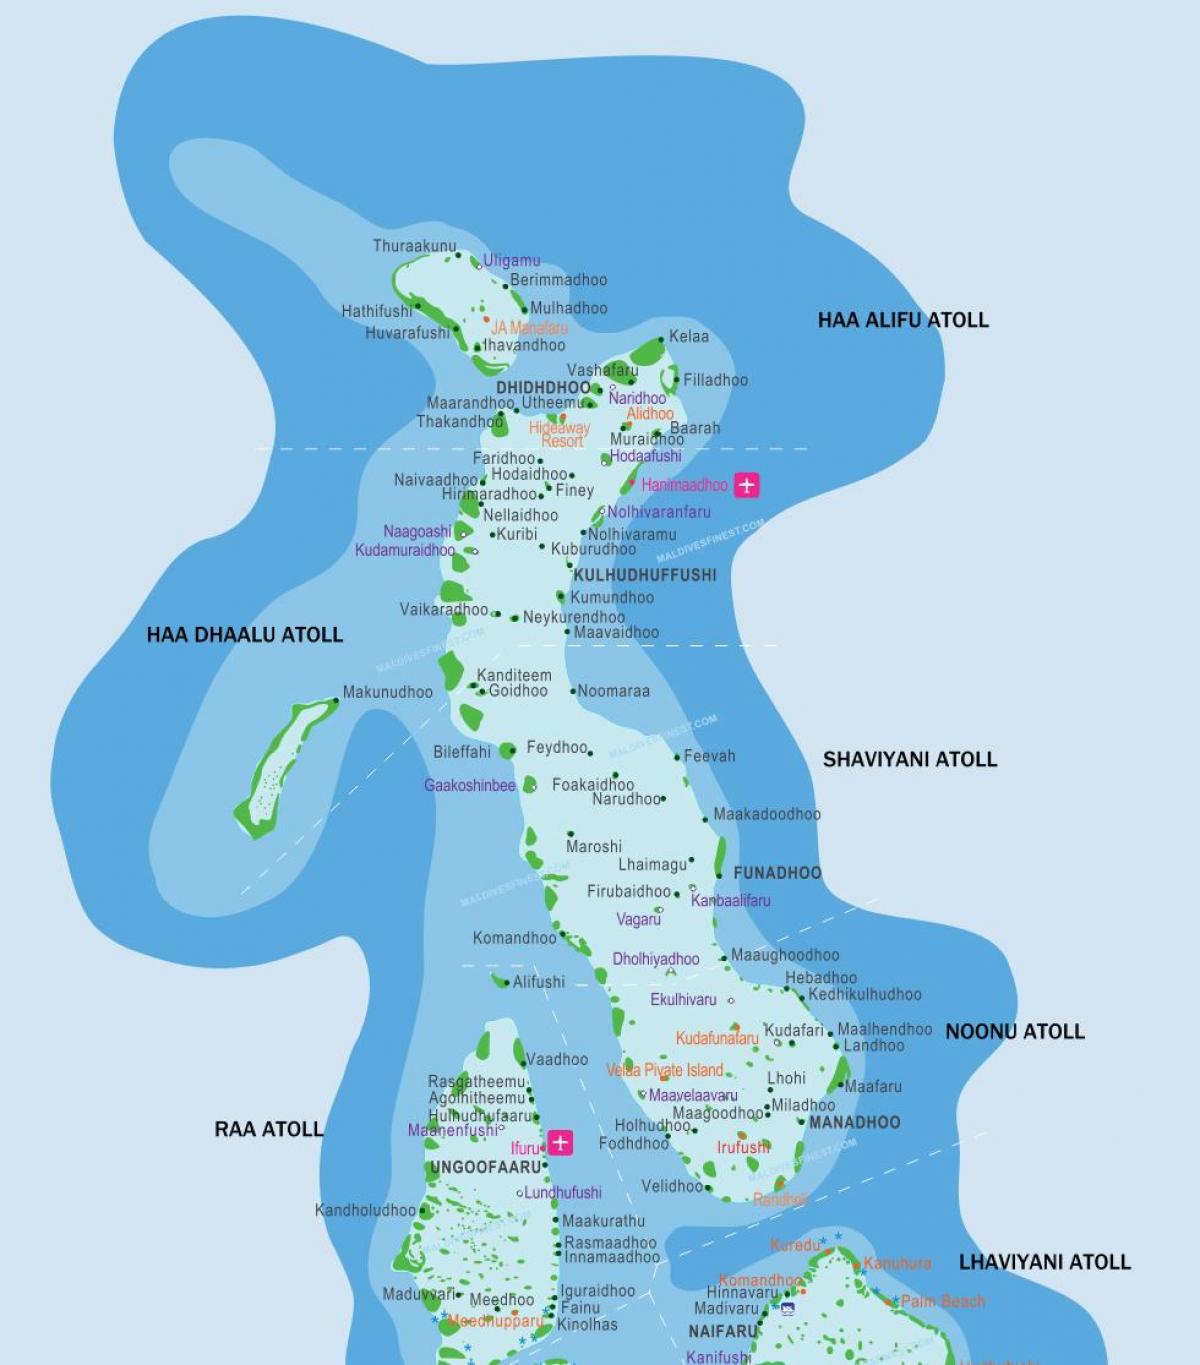 Malediven resorts Landkarte